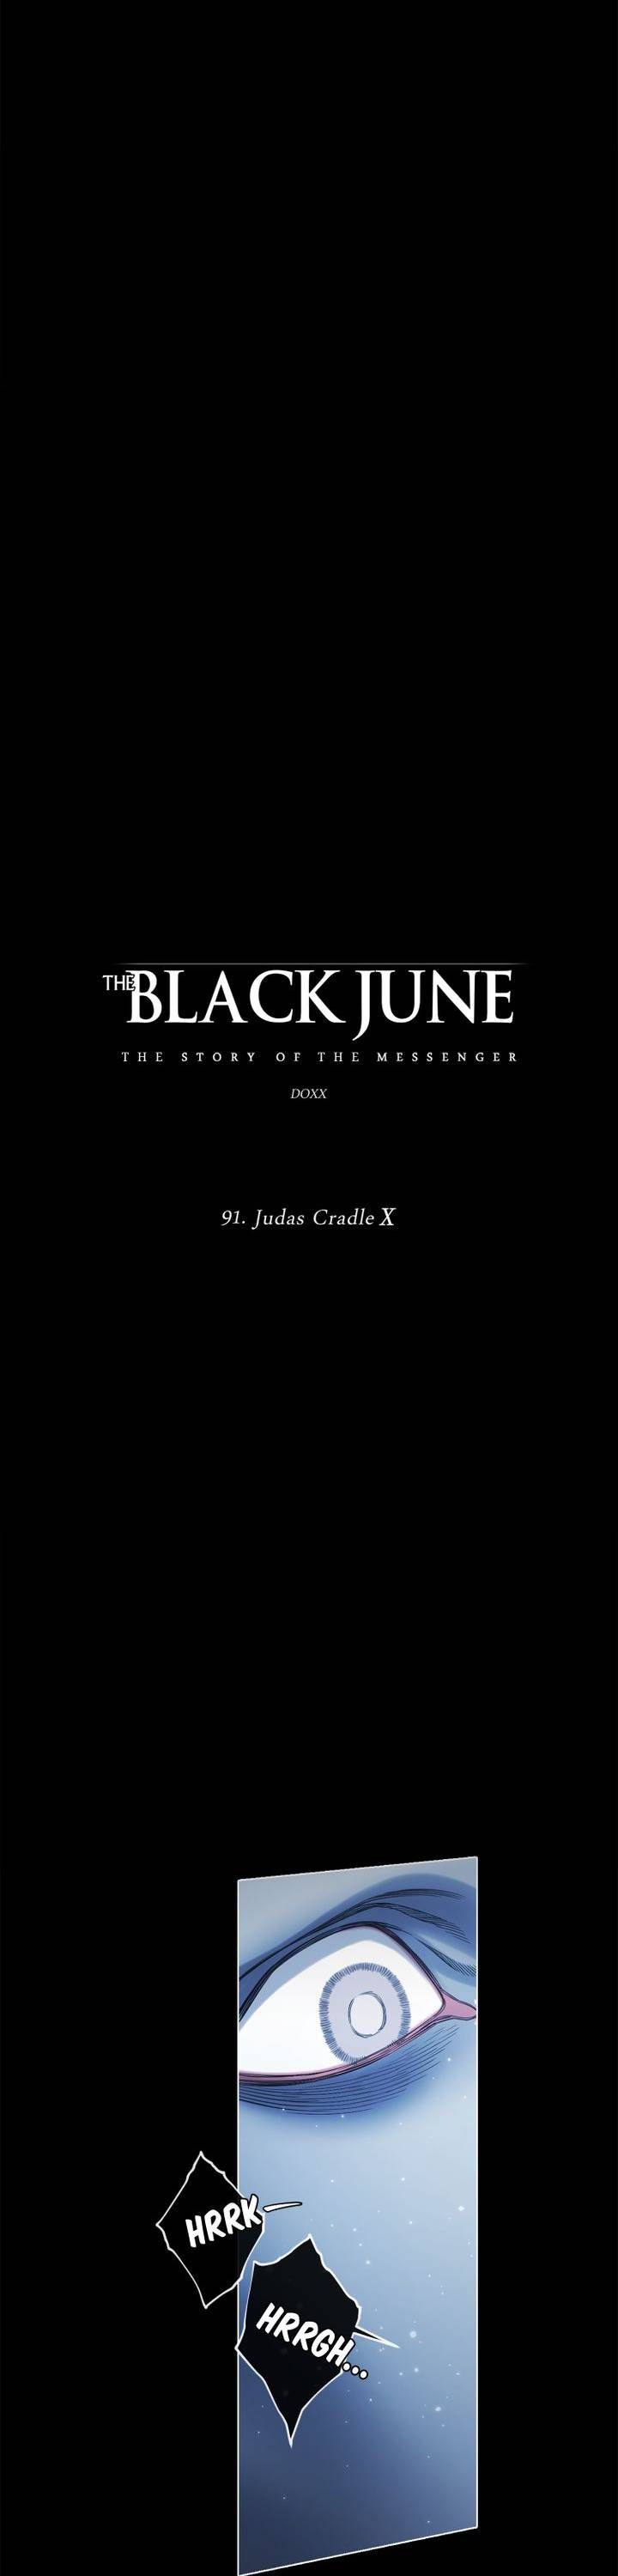 The Black June 91 9